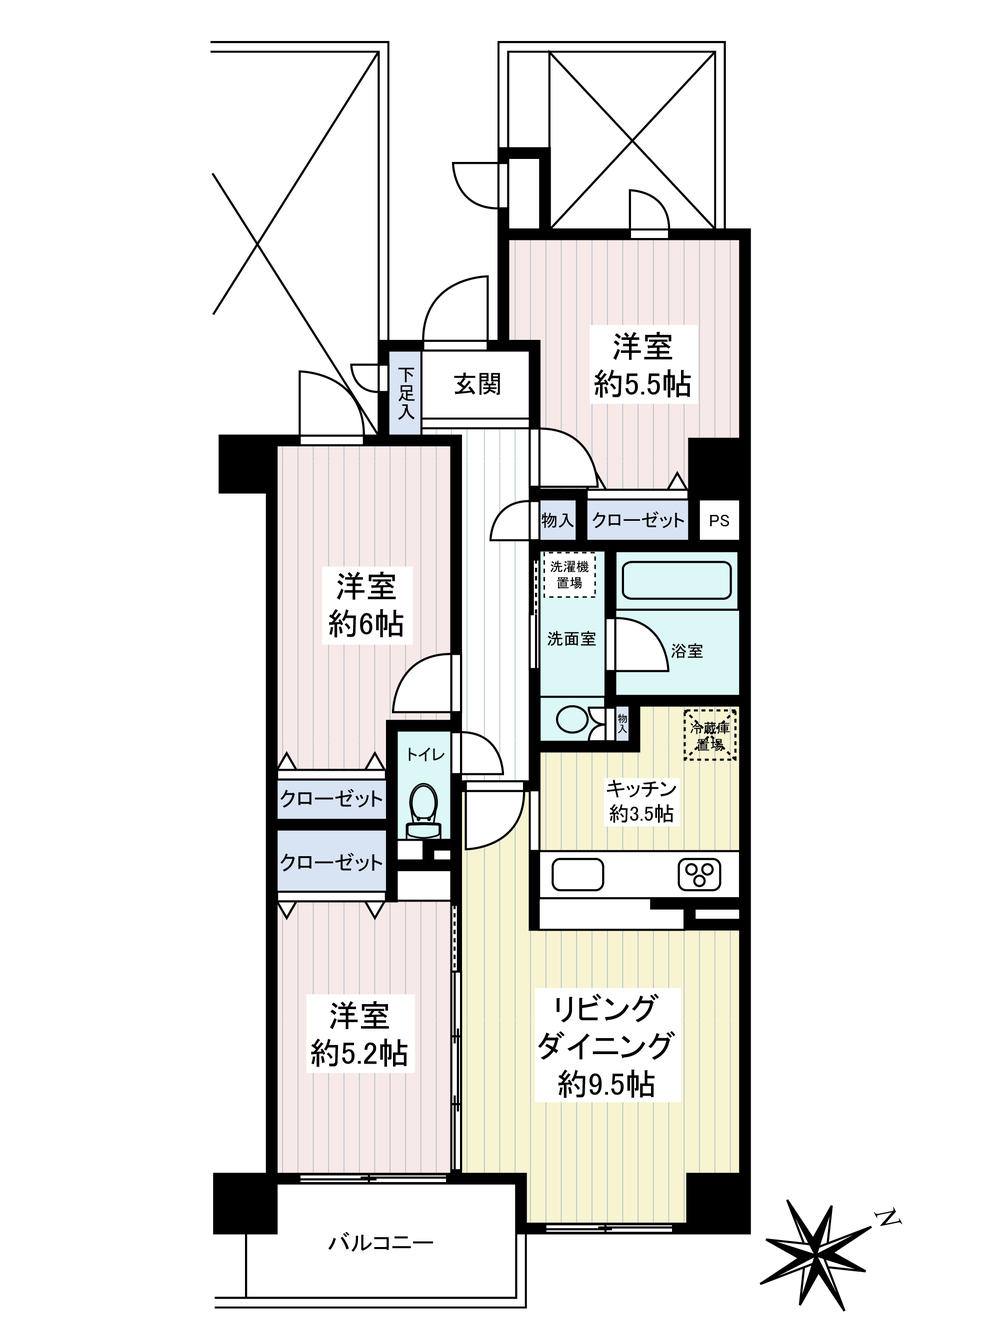 Floor plan. 3LDK, Price 39,800,000 yen, Footprint 68.9 sq m , Balcony area 5.6 sq m